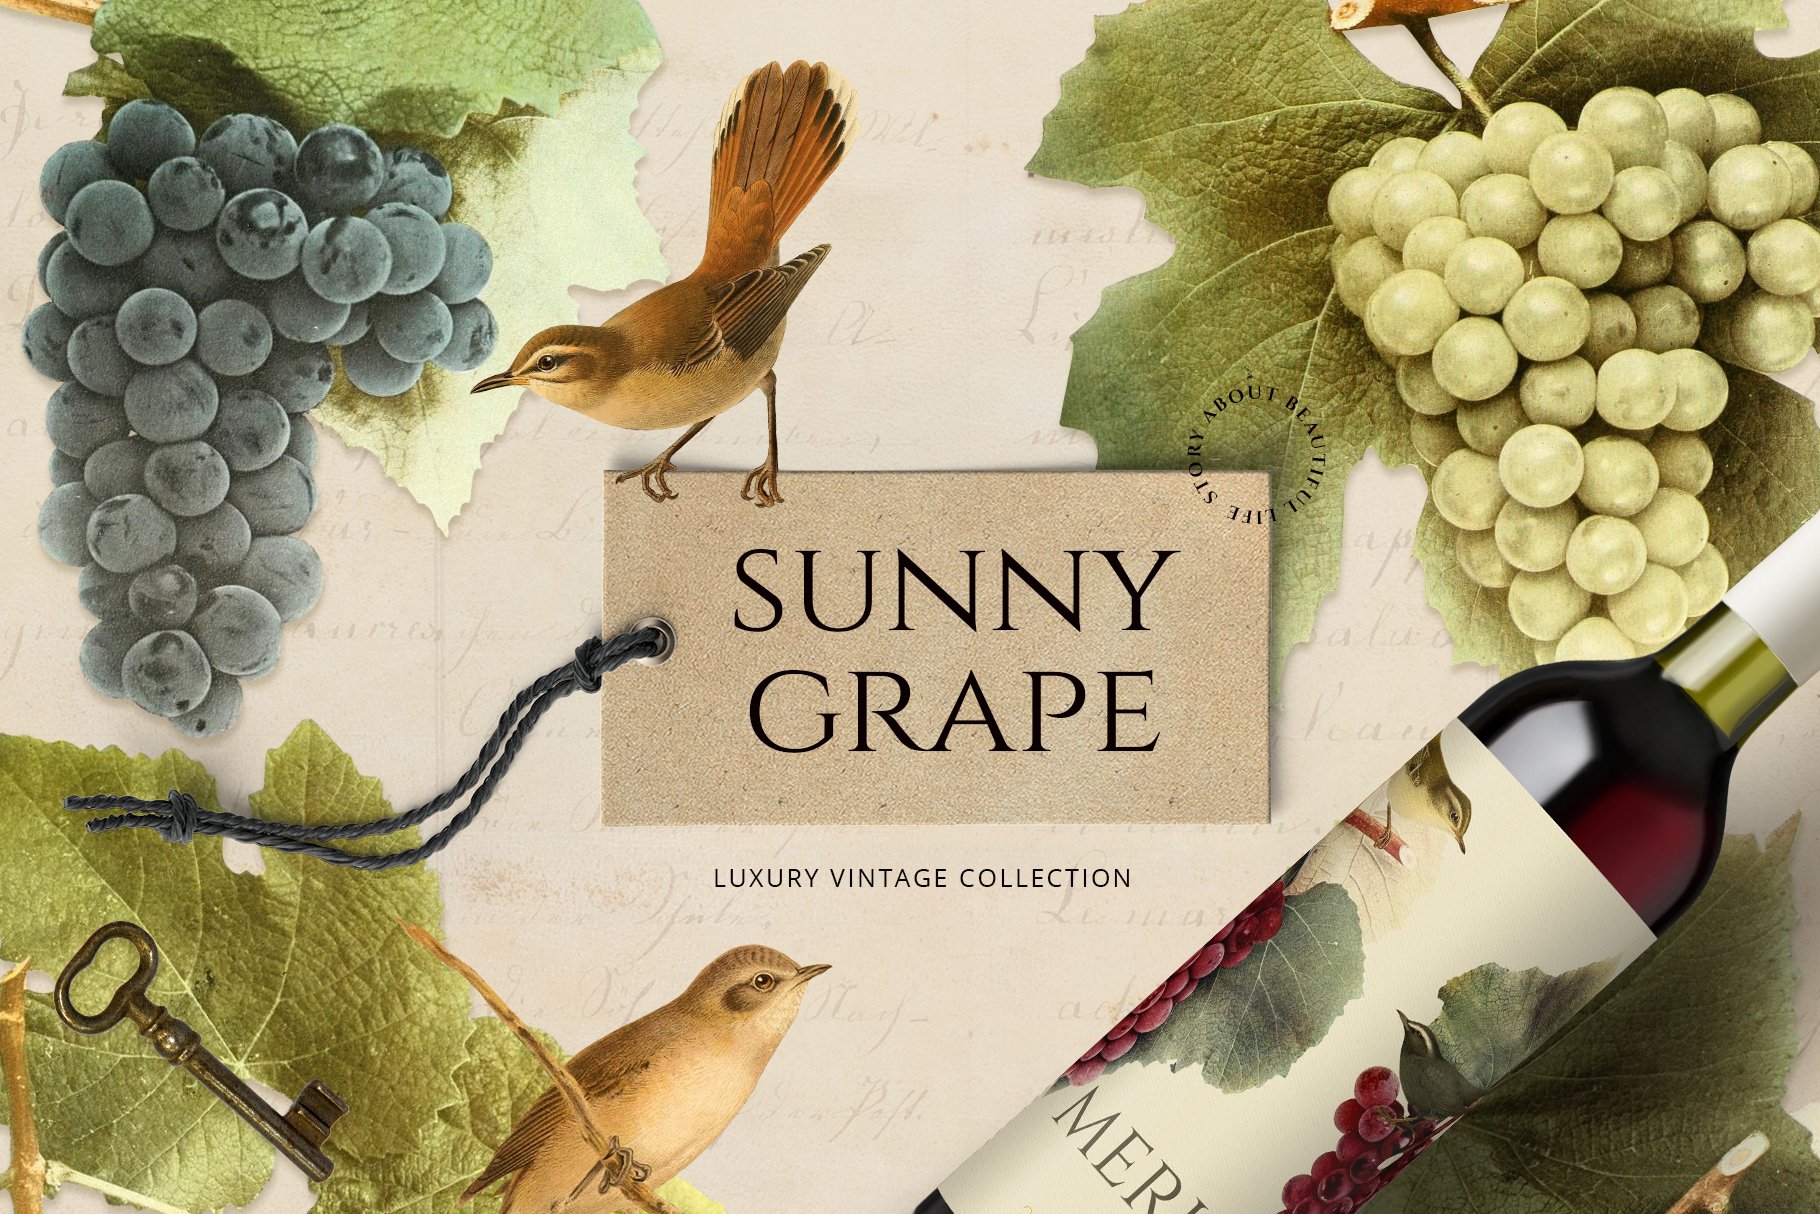 Sunny Grape - luxury vintage set cover image.